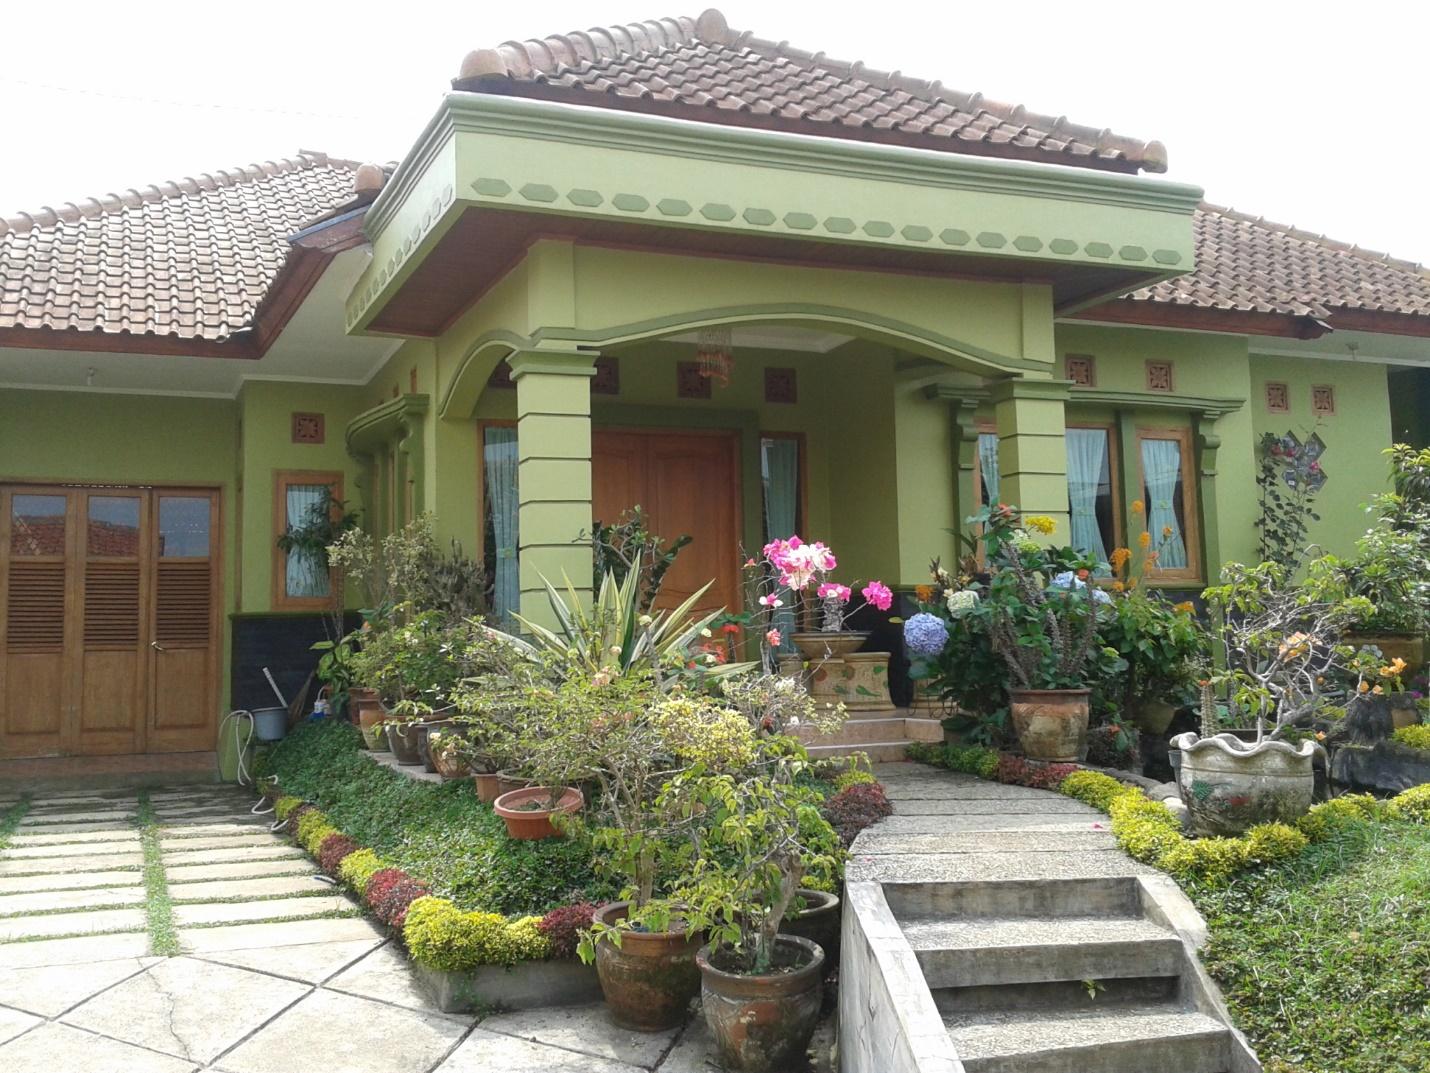 6 Macam Bentuk Rumah Sederhana Di Kampung Yang Cantik Dan Asri